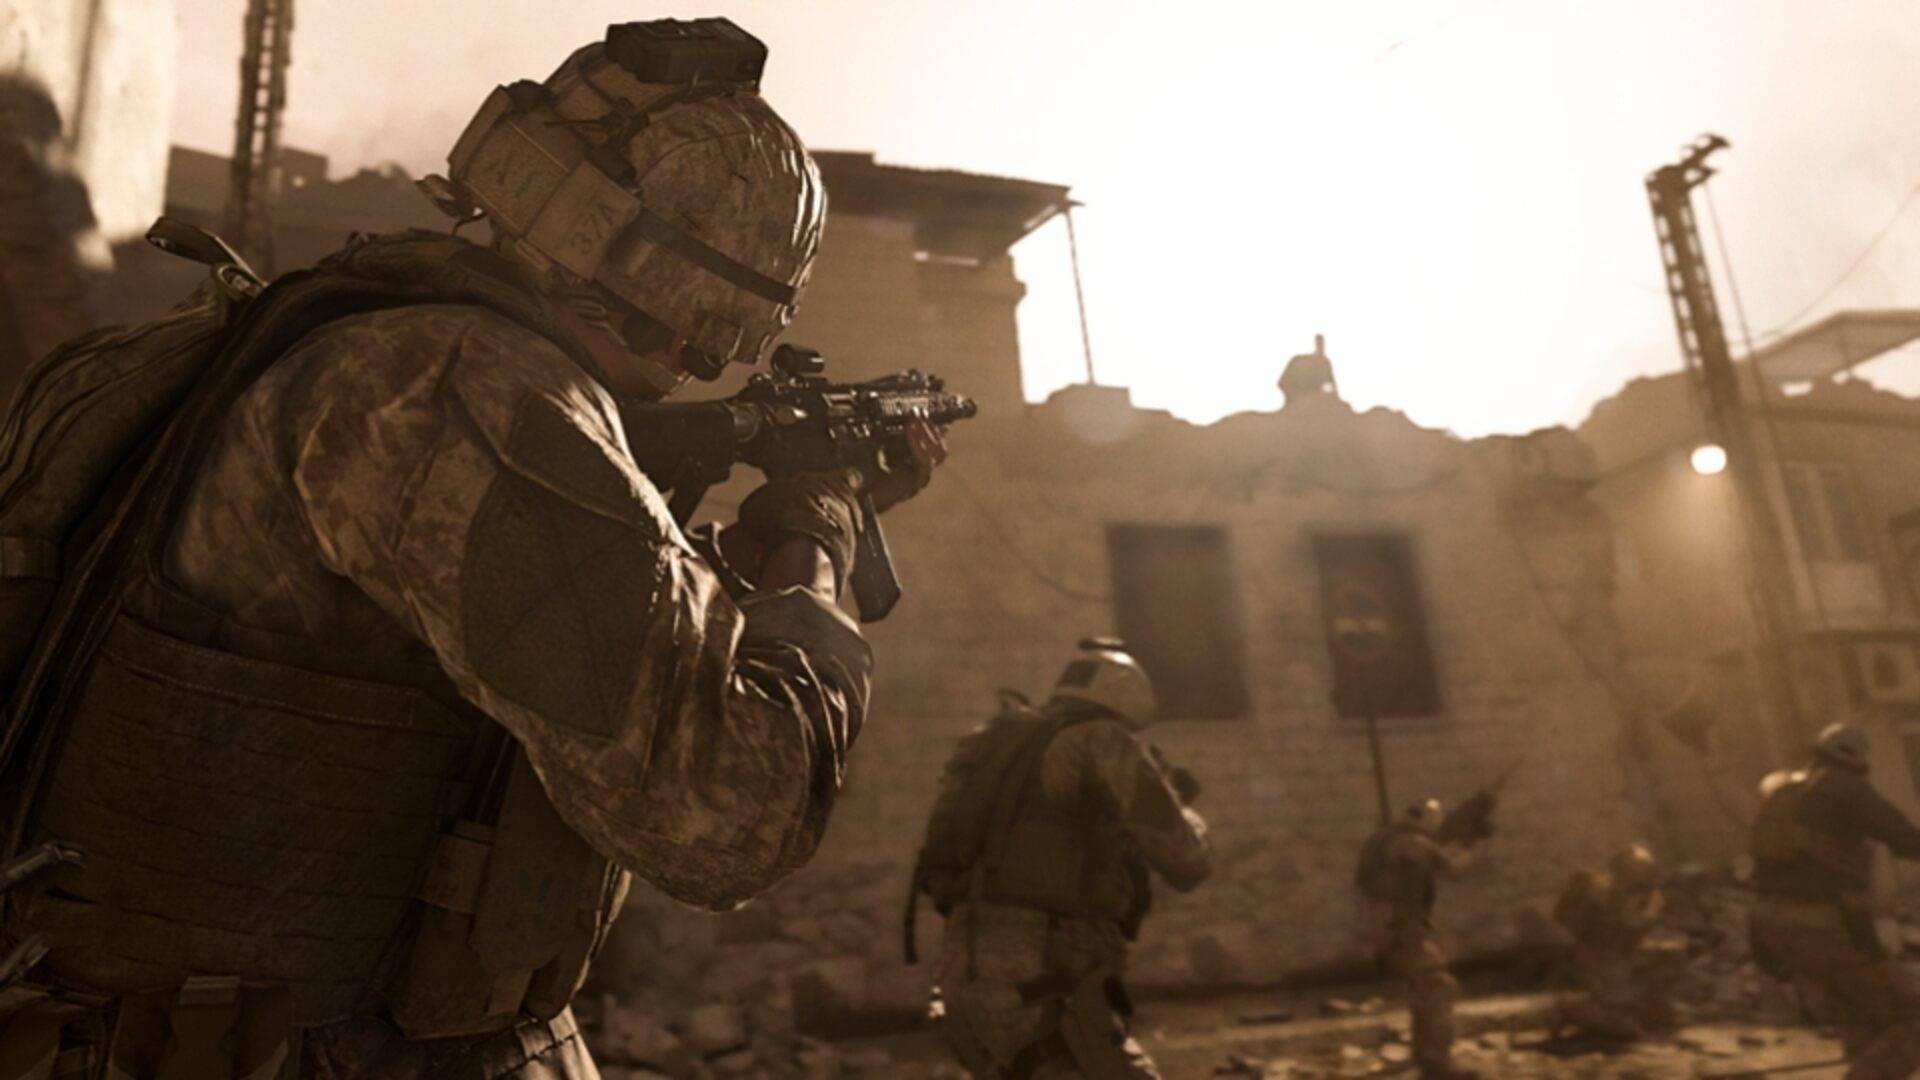 Buy cheap Call of Duty: Modern Warfare (2019) cd key - lowest price